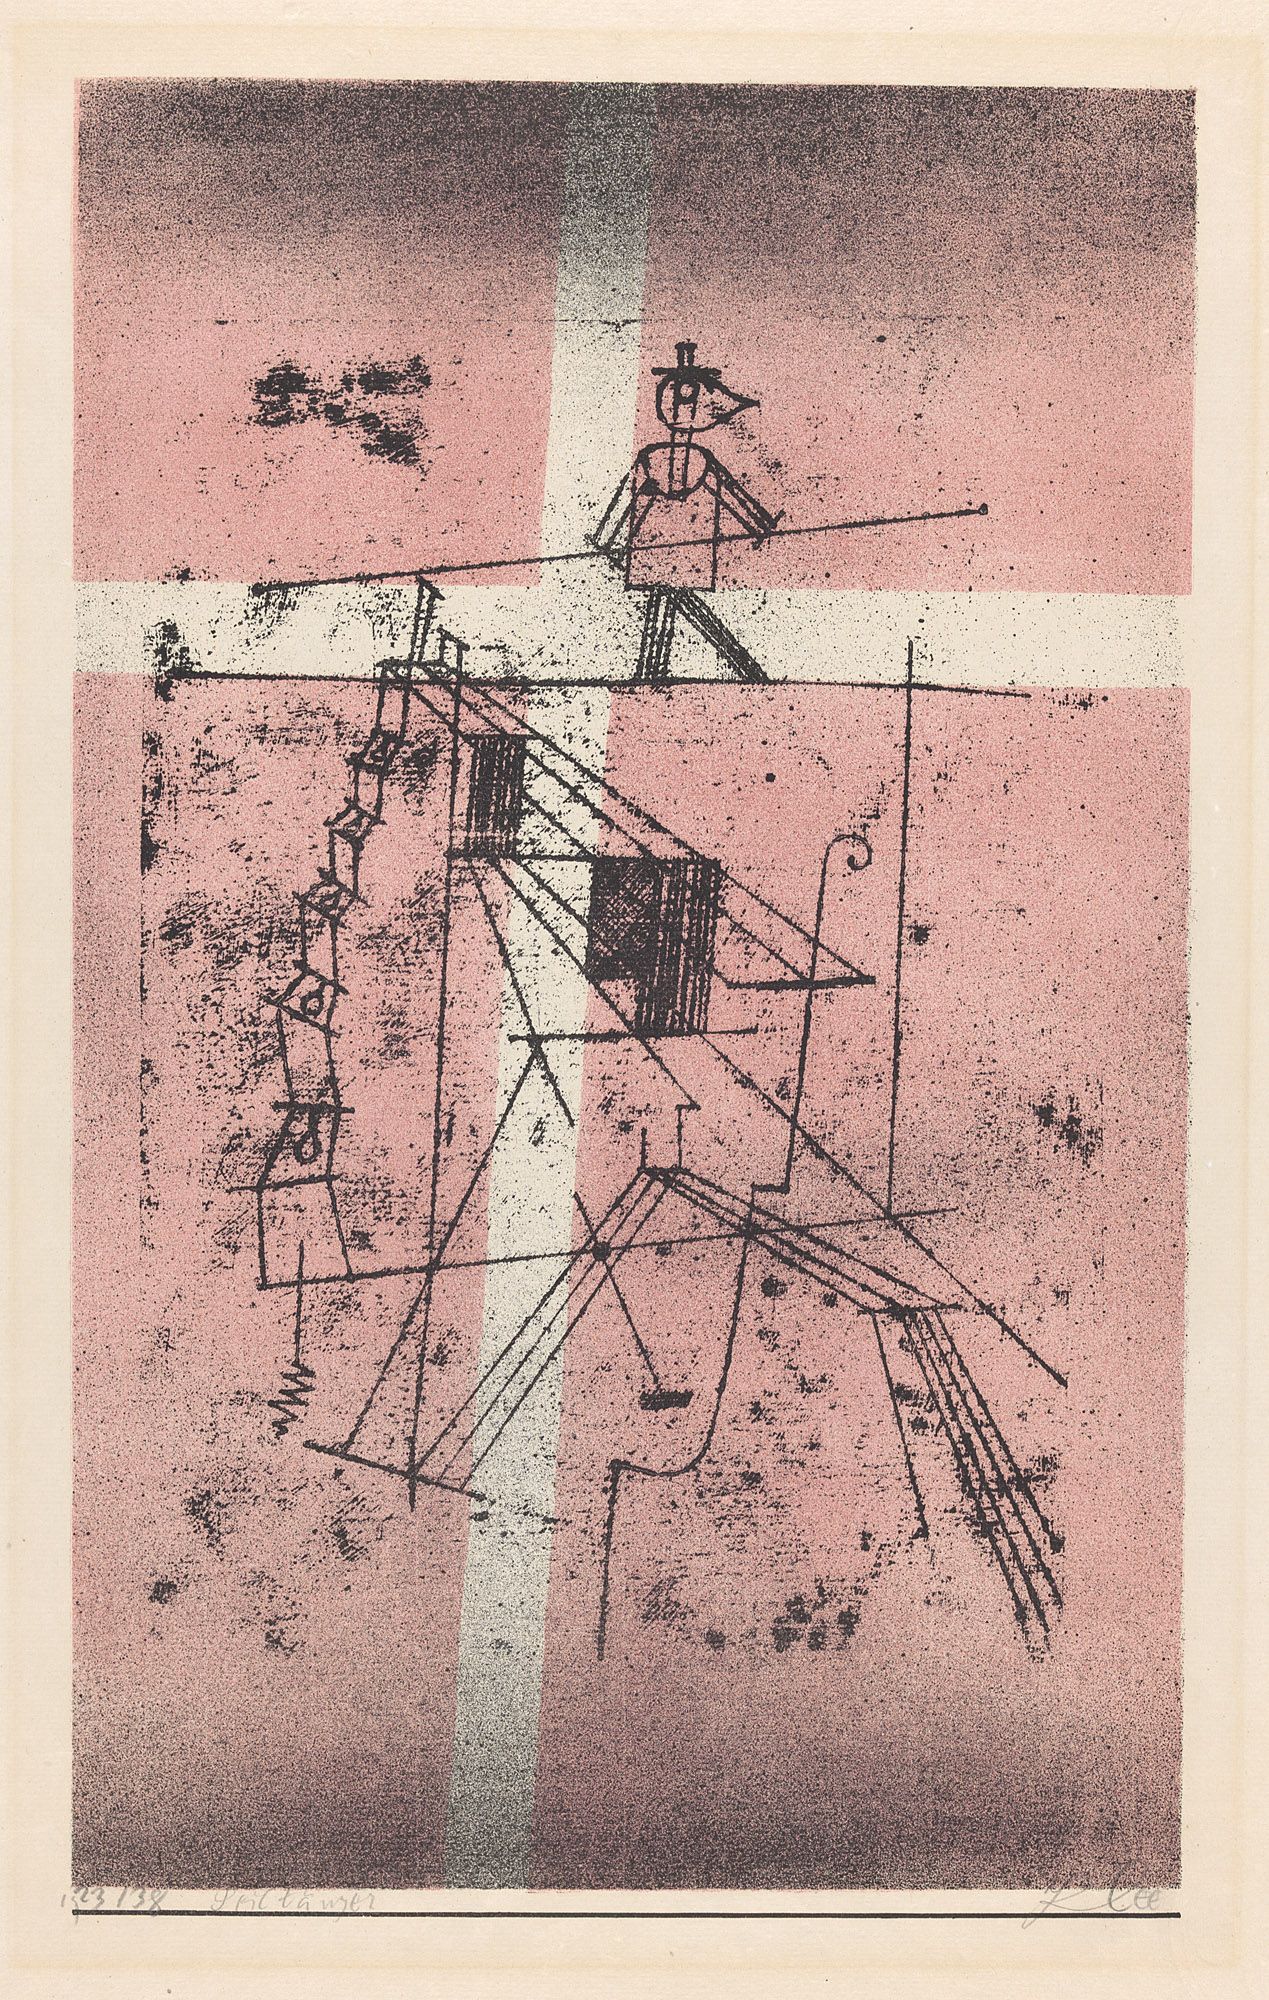 Provazochodec by Paul Klee - 1923 - 48,7 cm x 32,2 cm  